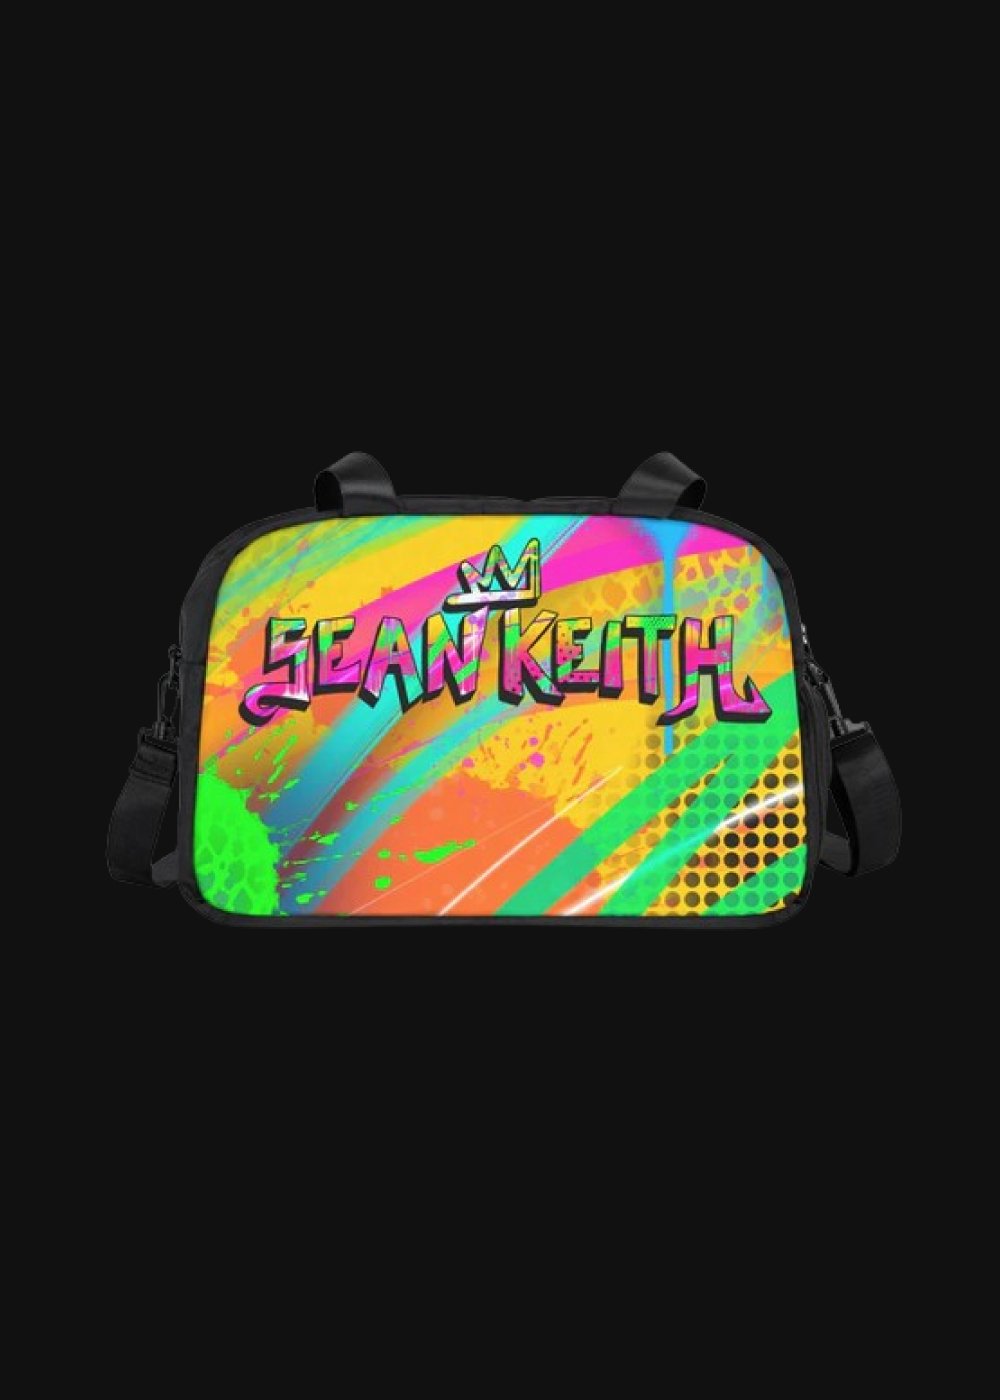 Sean Keith Fitness Handbag - Sean Keith Art